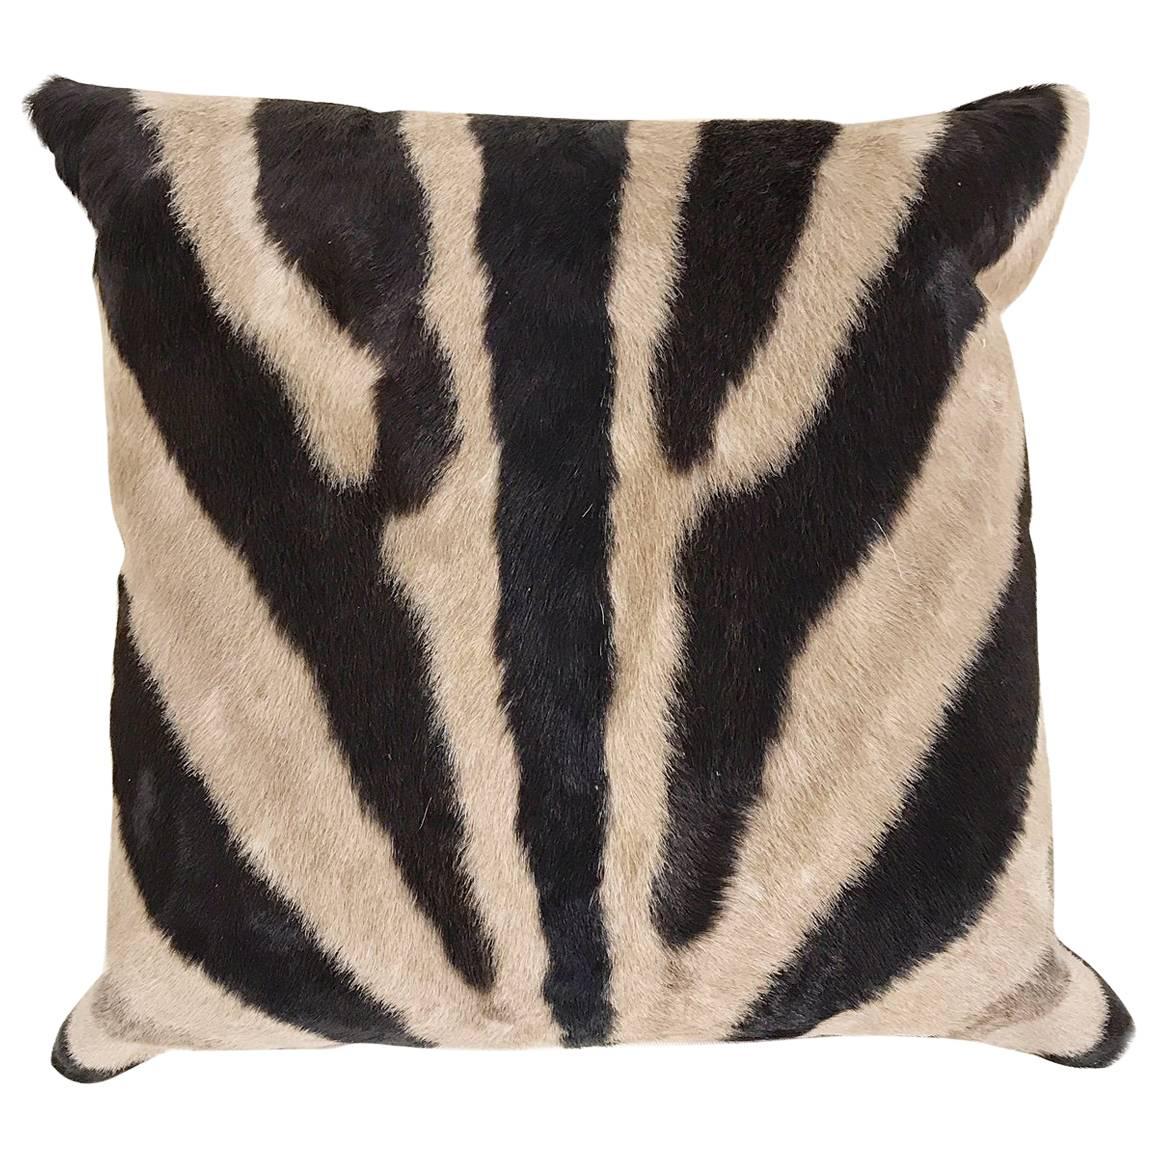 Zebra Hide Pillow